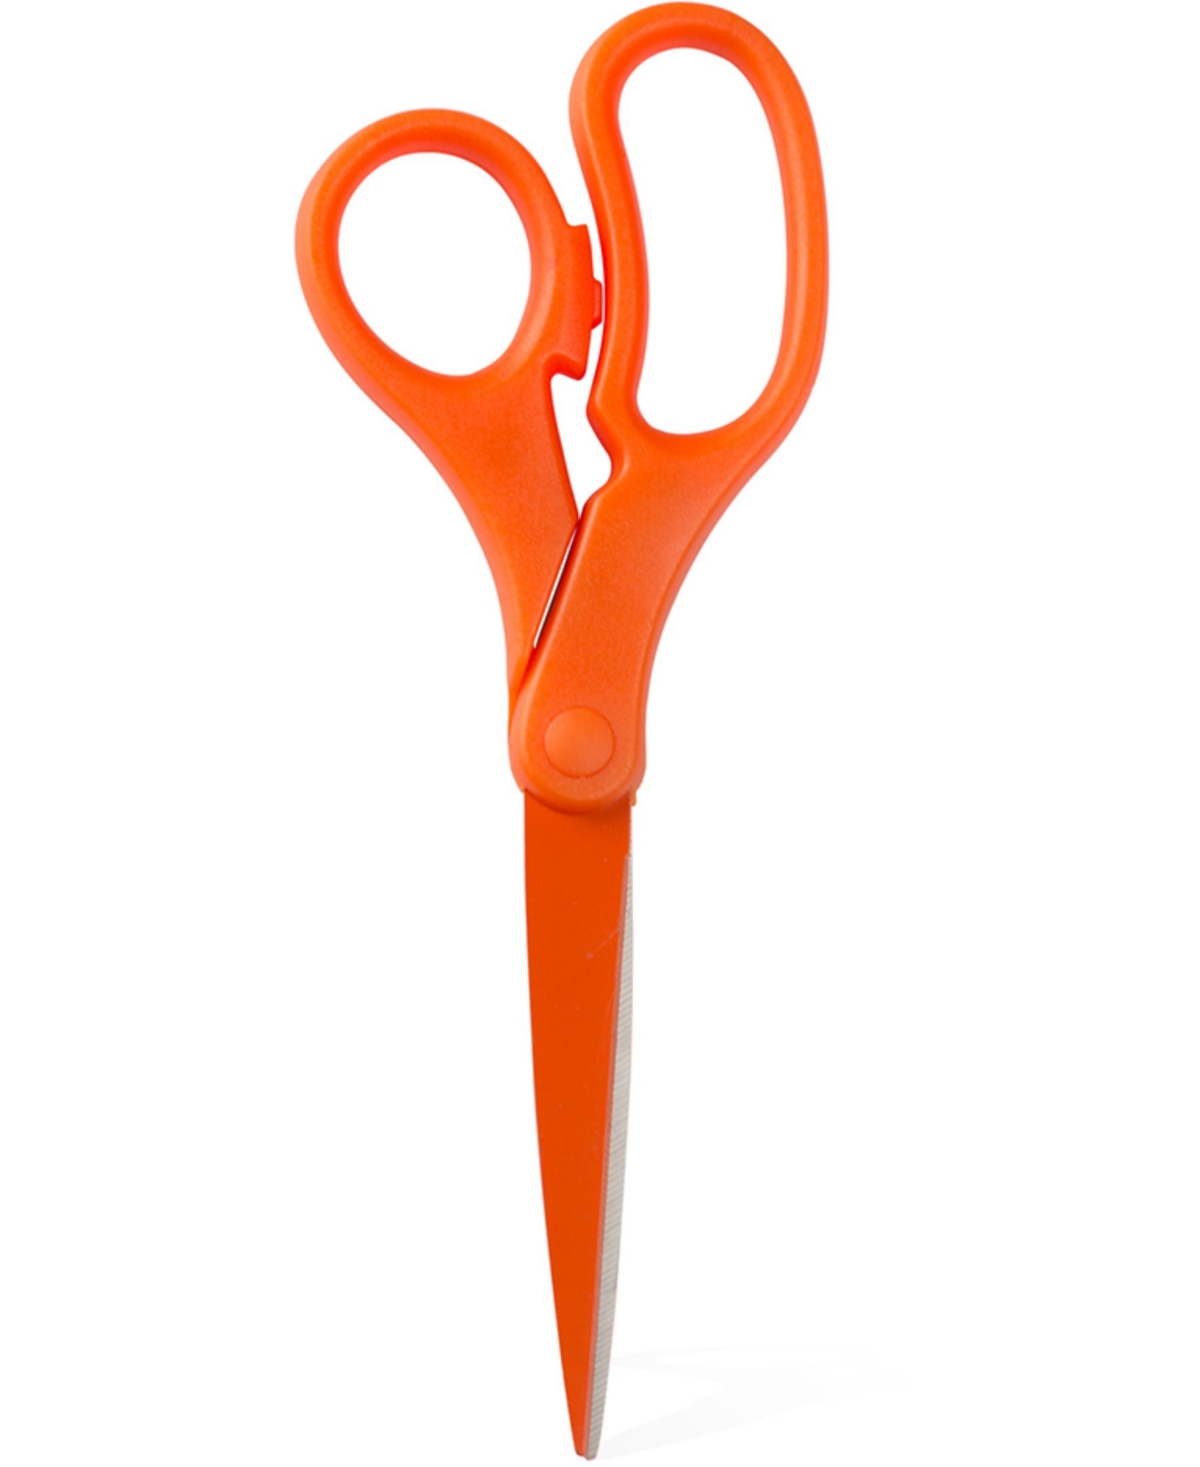 Multi-Purpose Precision Scissors - 8" - Ergonomic Handle Stainless Steel Blades - Sold Individually - Orange